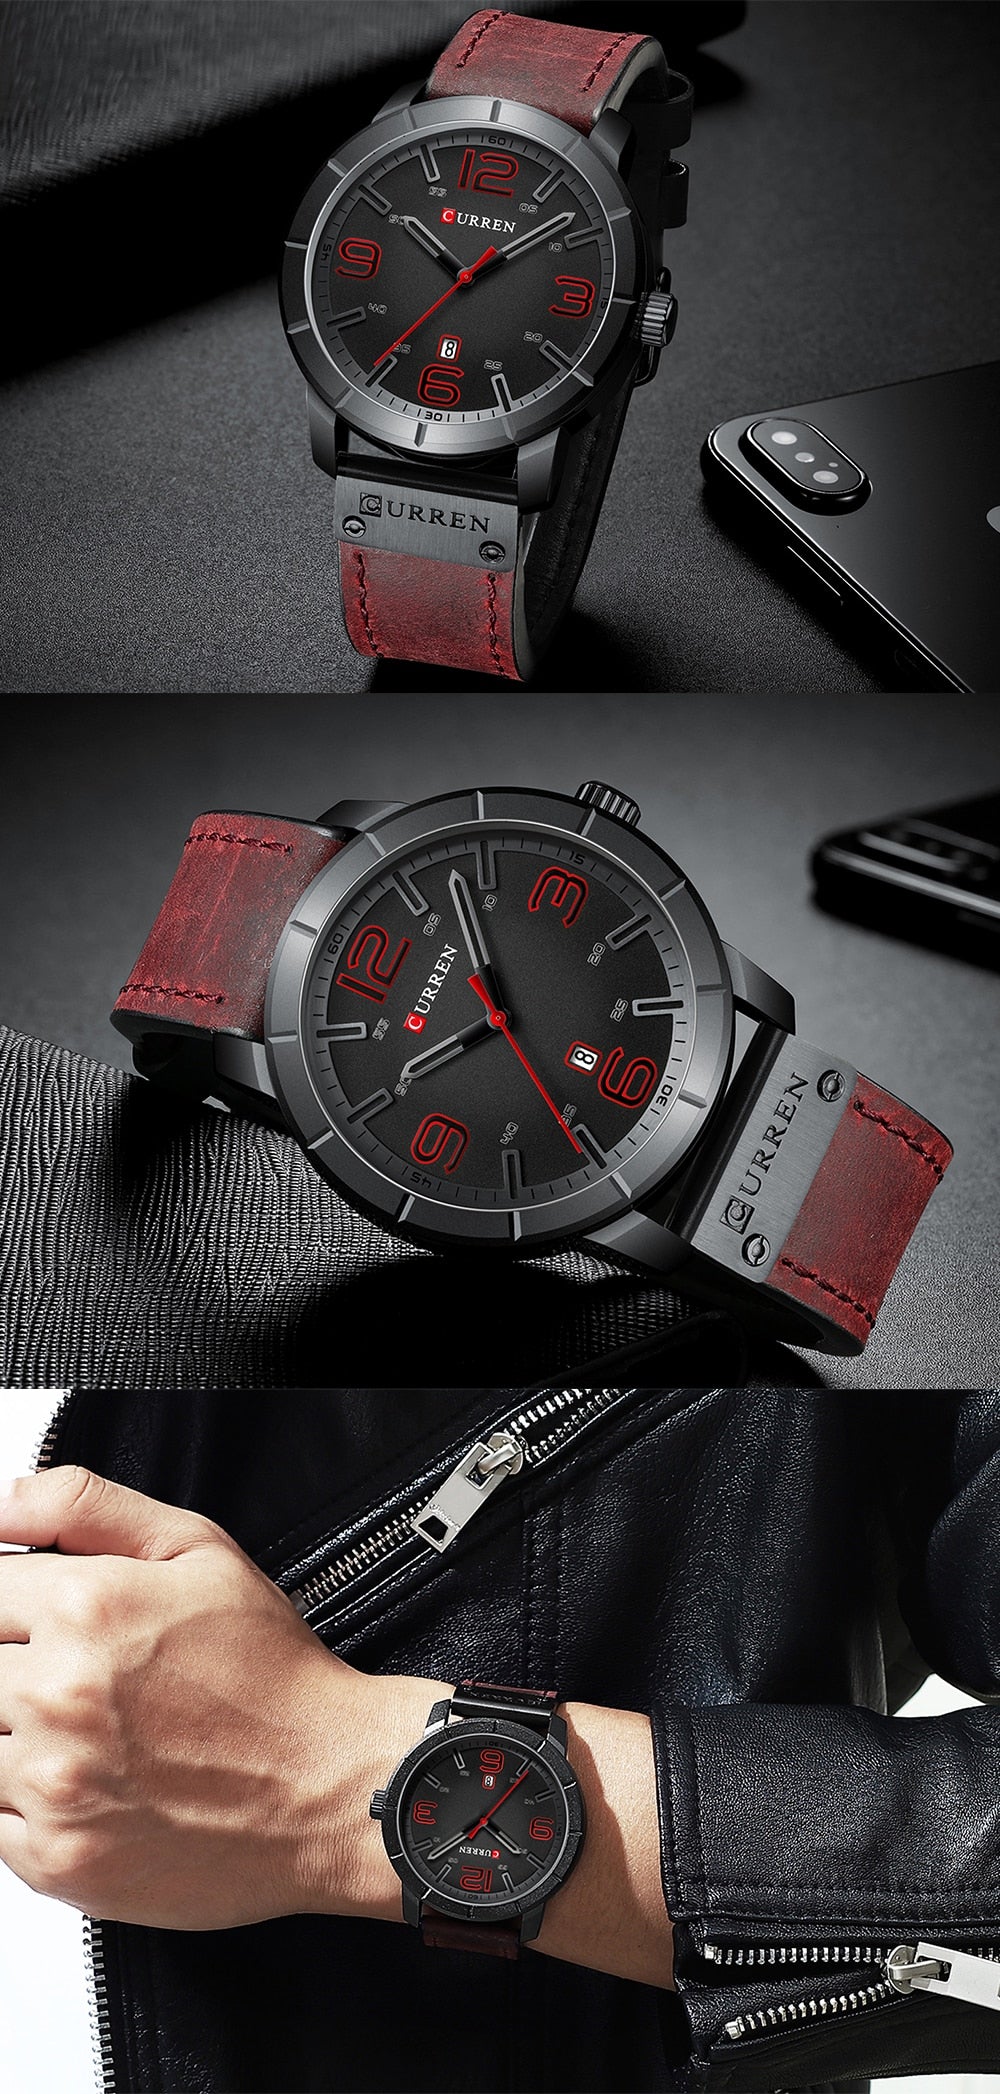 YSYH Quartz Wrist Watch Men Watches Luxury Leather Wristwatch For Male Clock